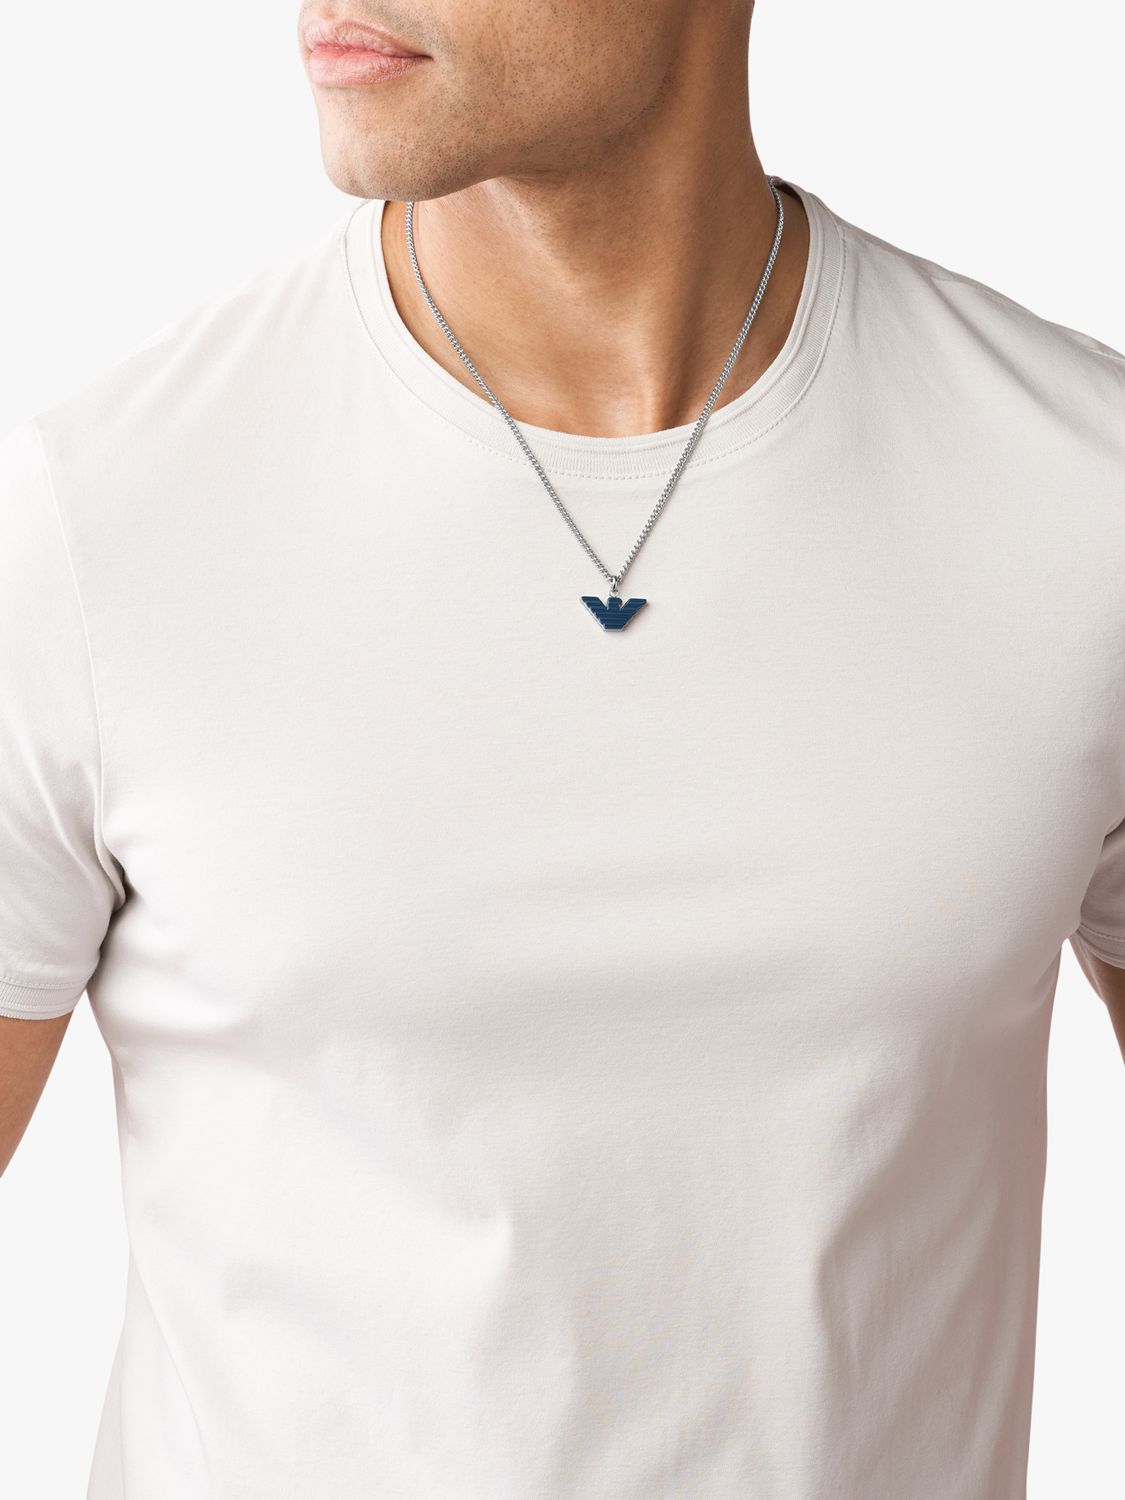 Emporio Armani Men's Logo Pendant Necklace, Silver EGS2909040 at